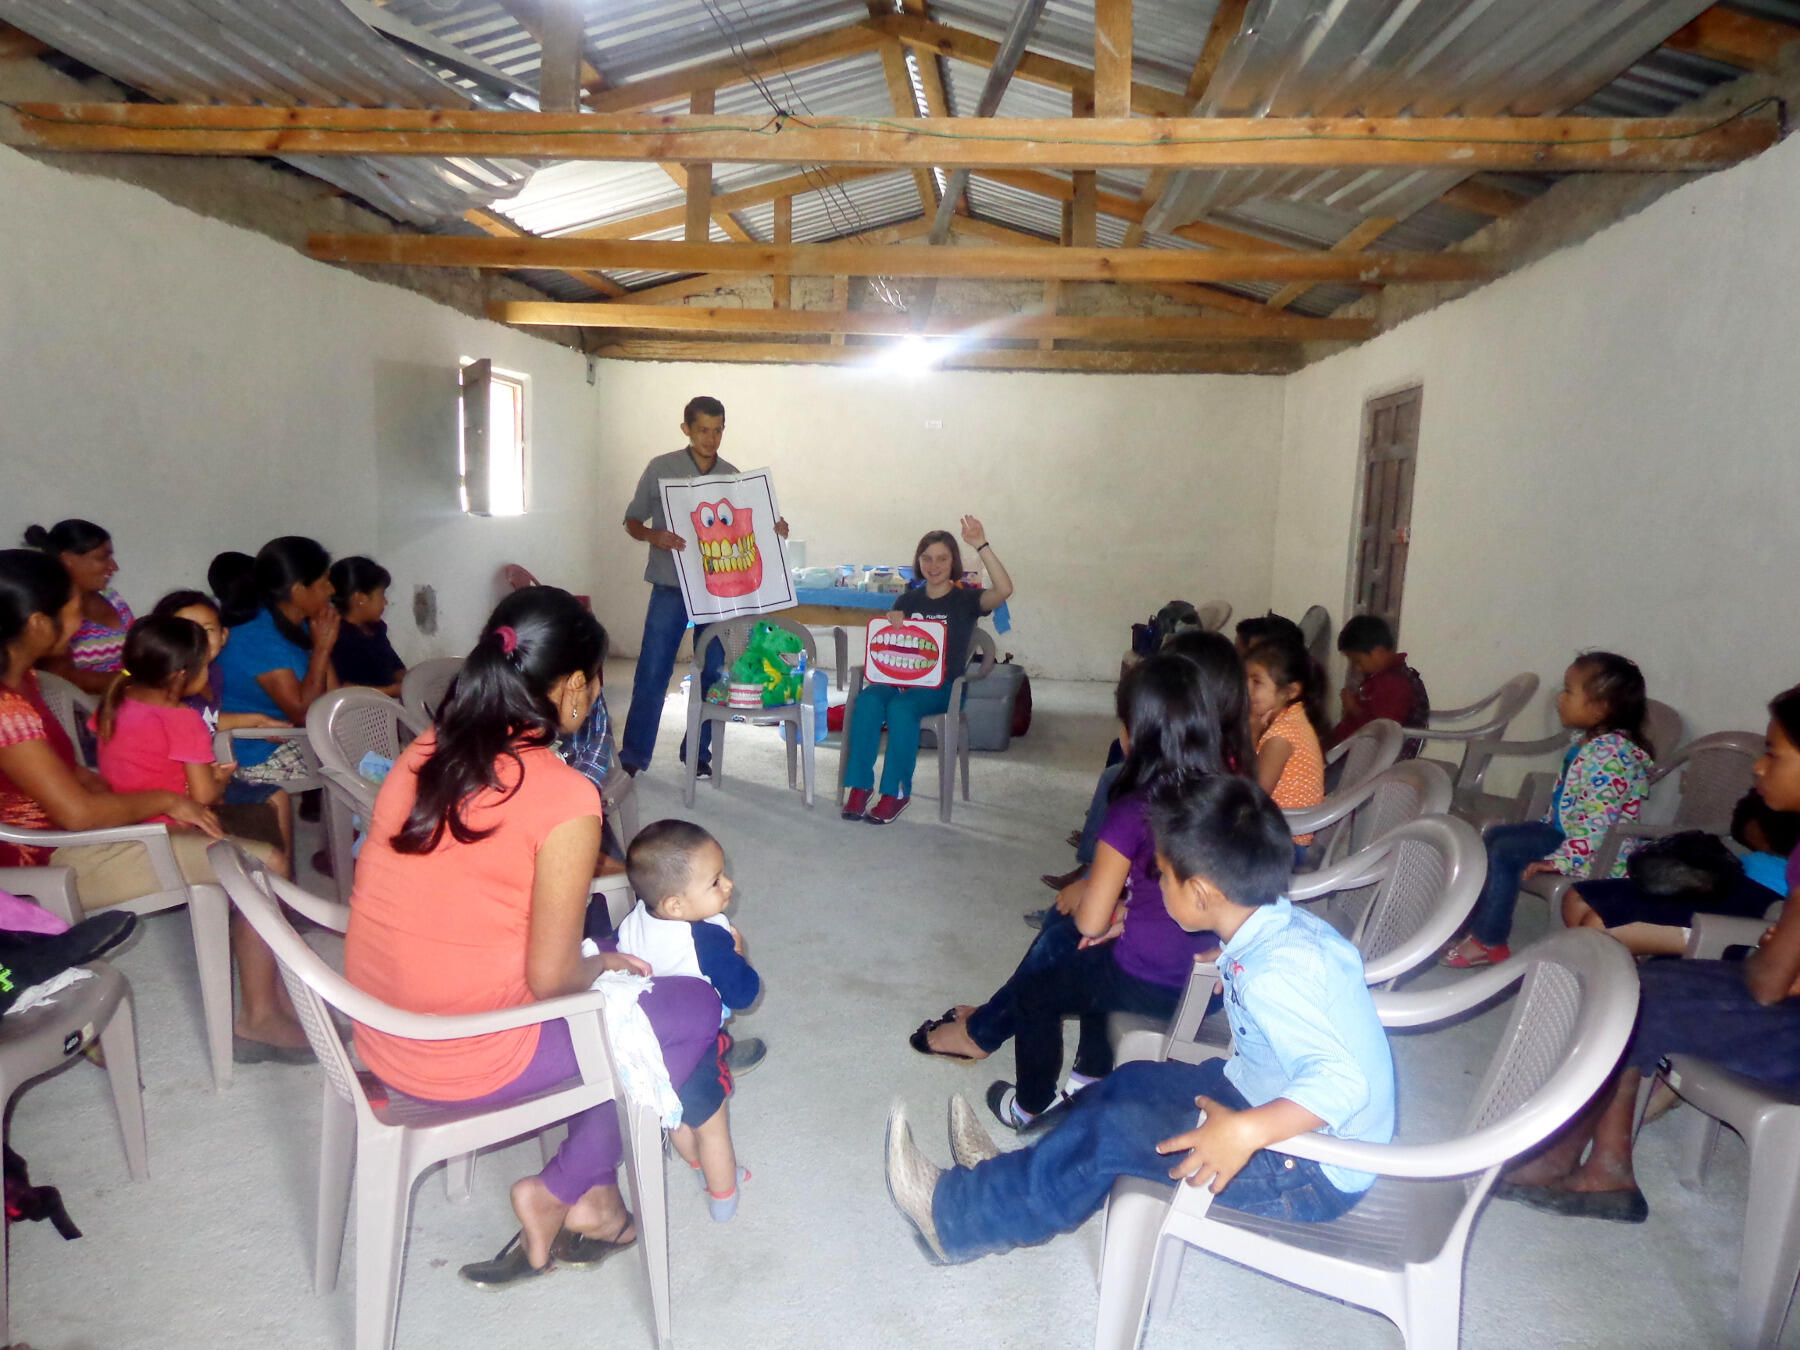 Lyubov Slashcheva visited villages surrounding Gracias, Honduras in December to provide dental hygiene education to the residents.